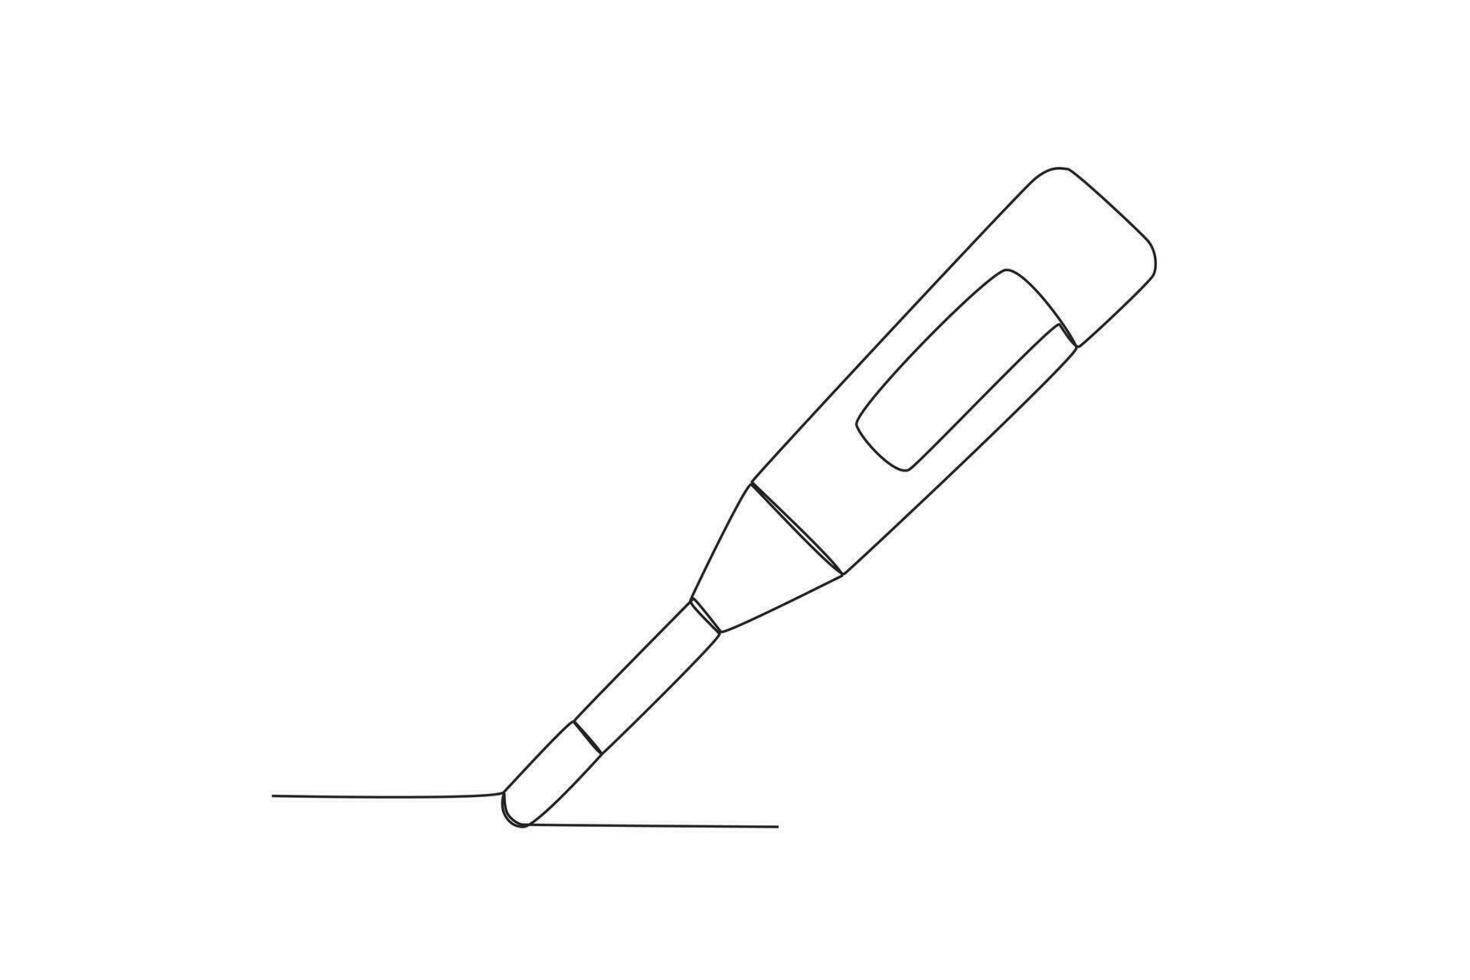 vektor kontinuerlig ett linje teckning av termometer enkel illustration av digital termometer linje konst vektor illustration